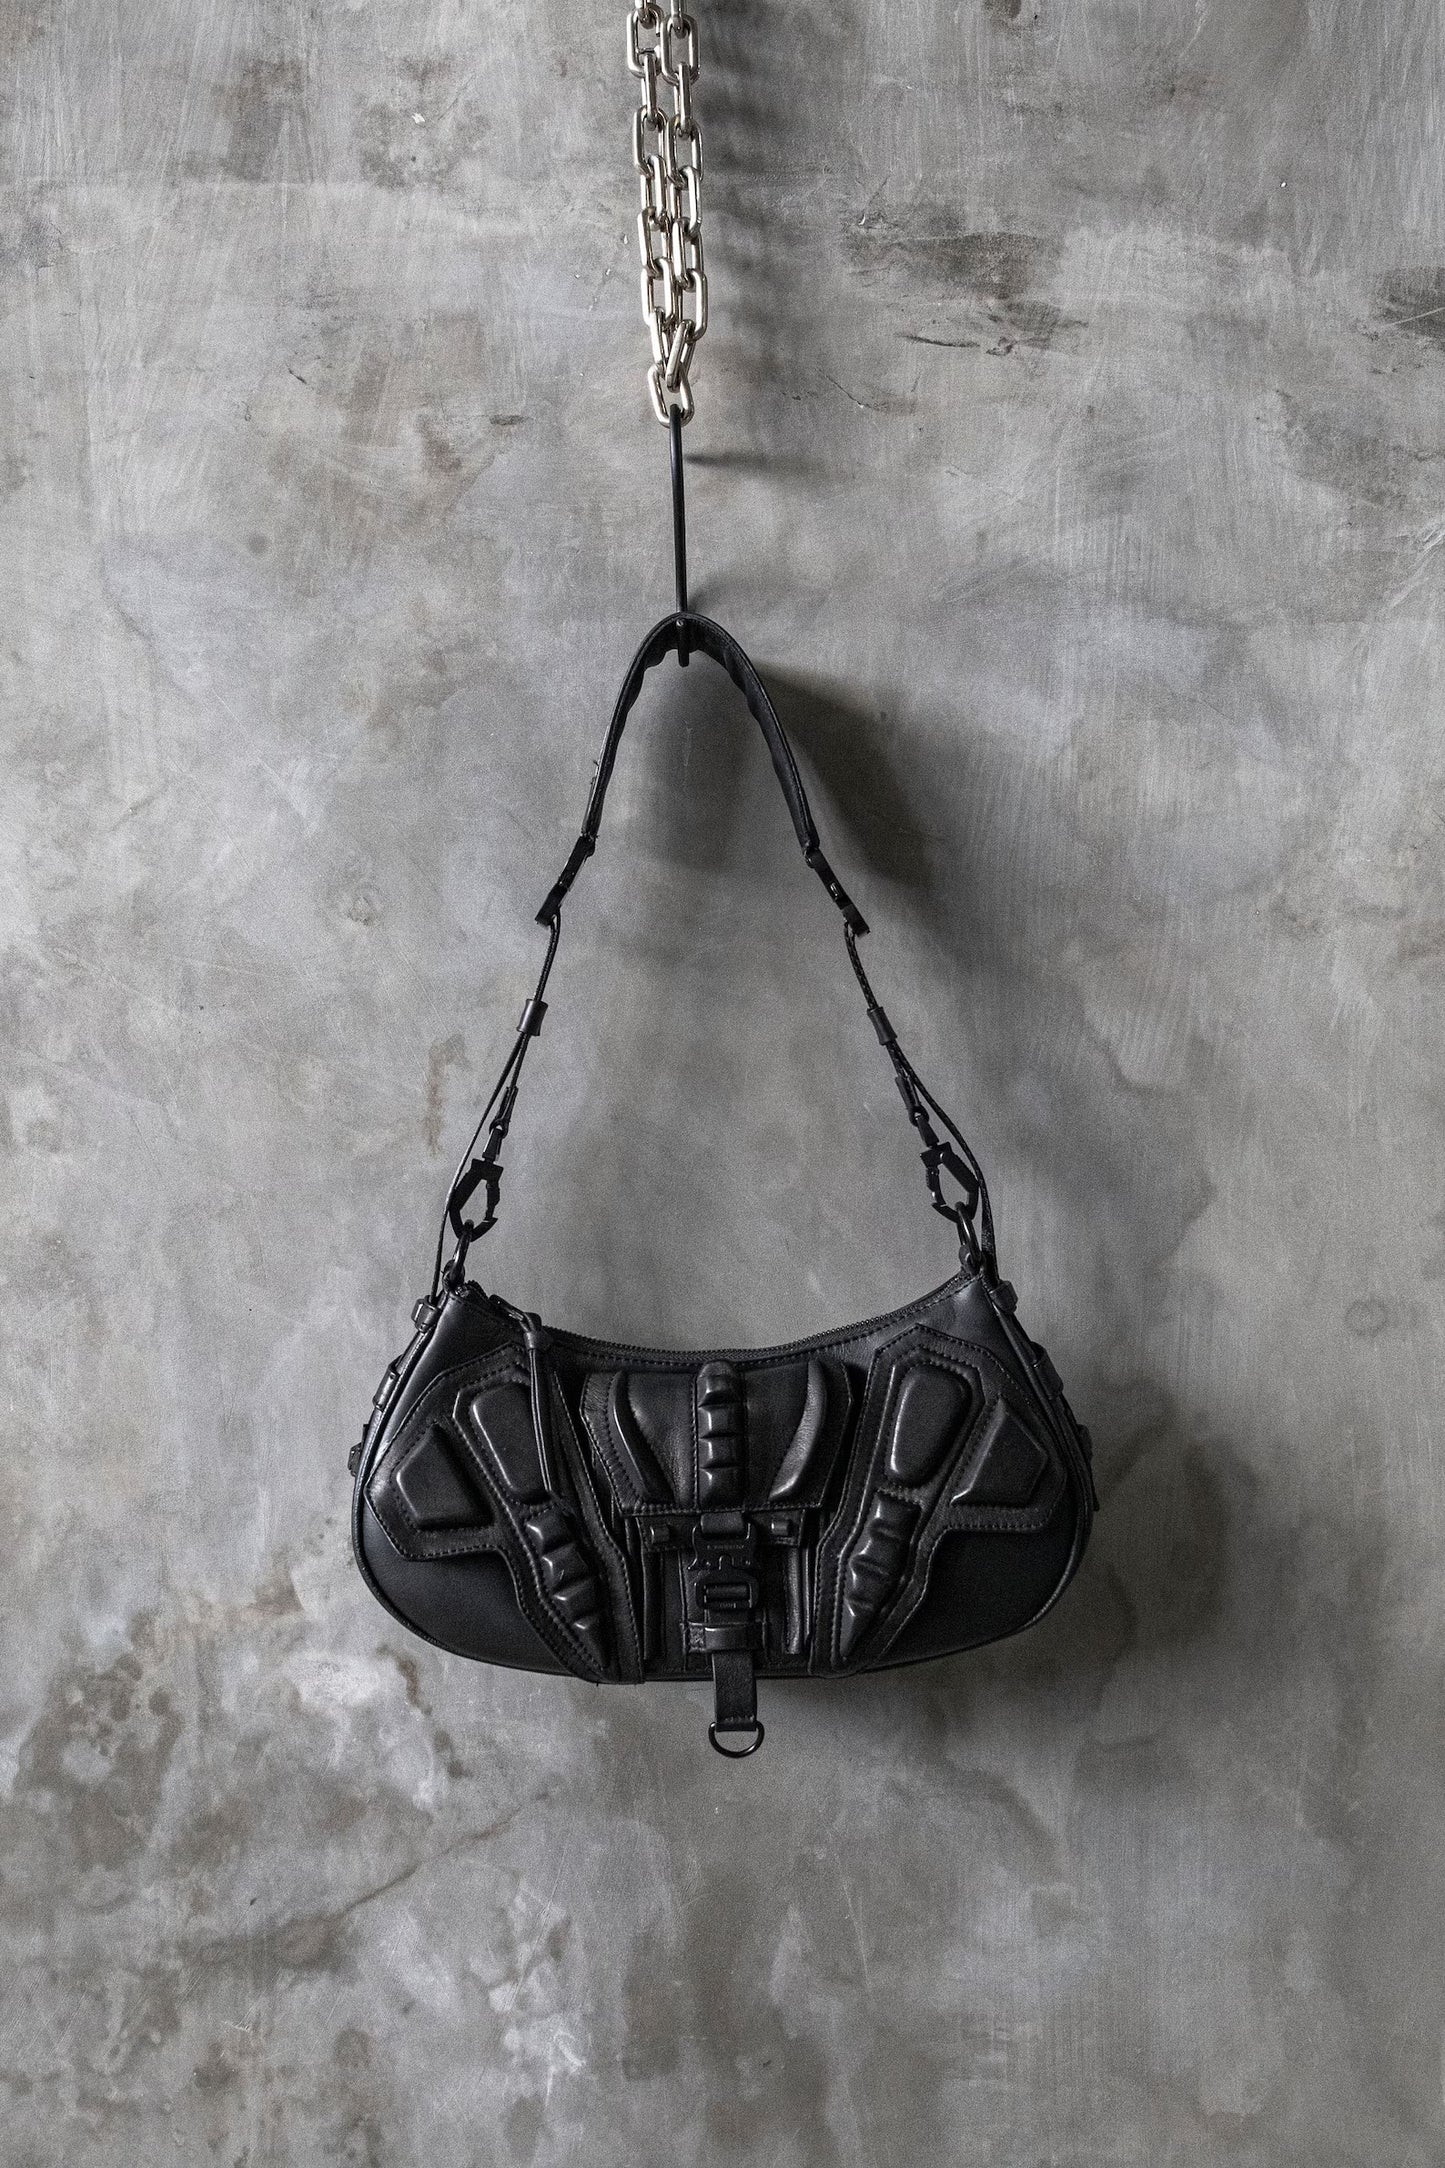 Tech21 Black Leather Purse Bag